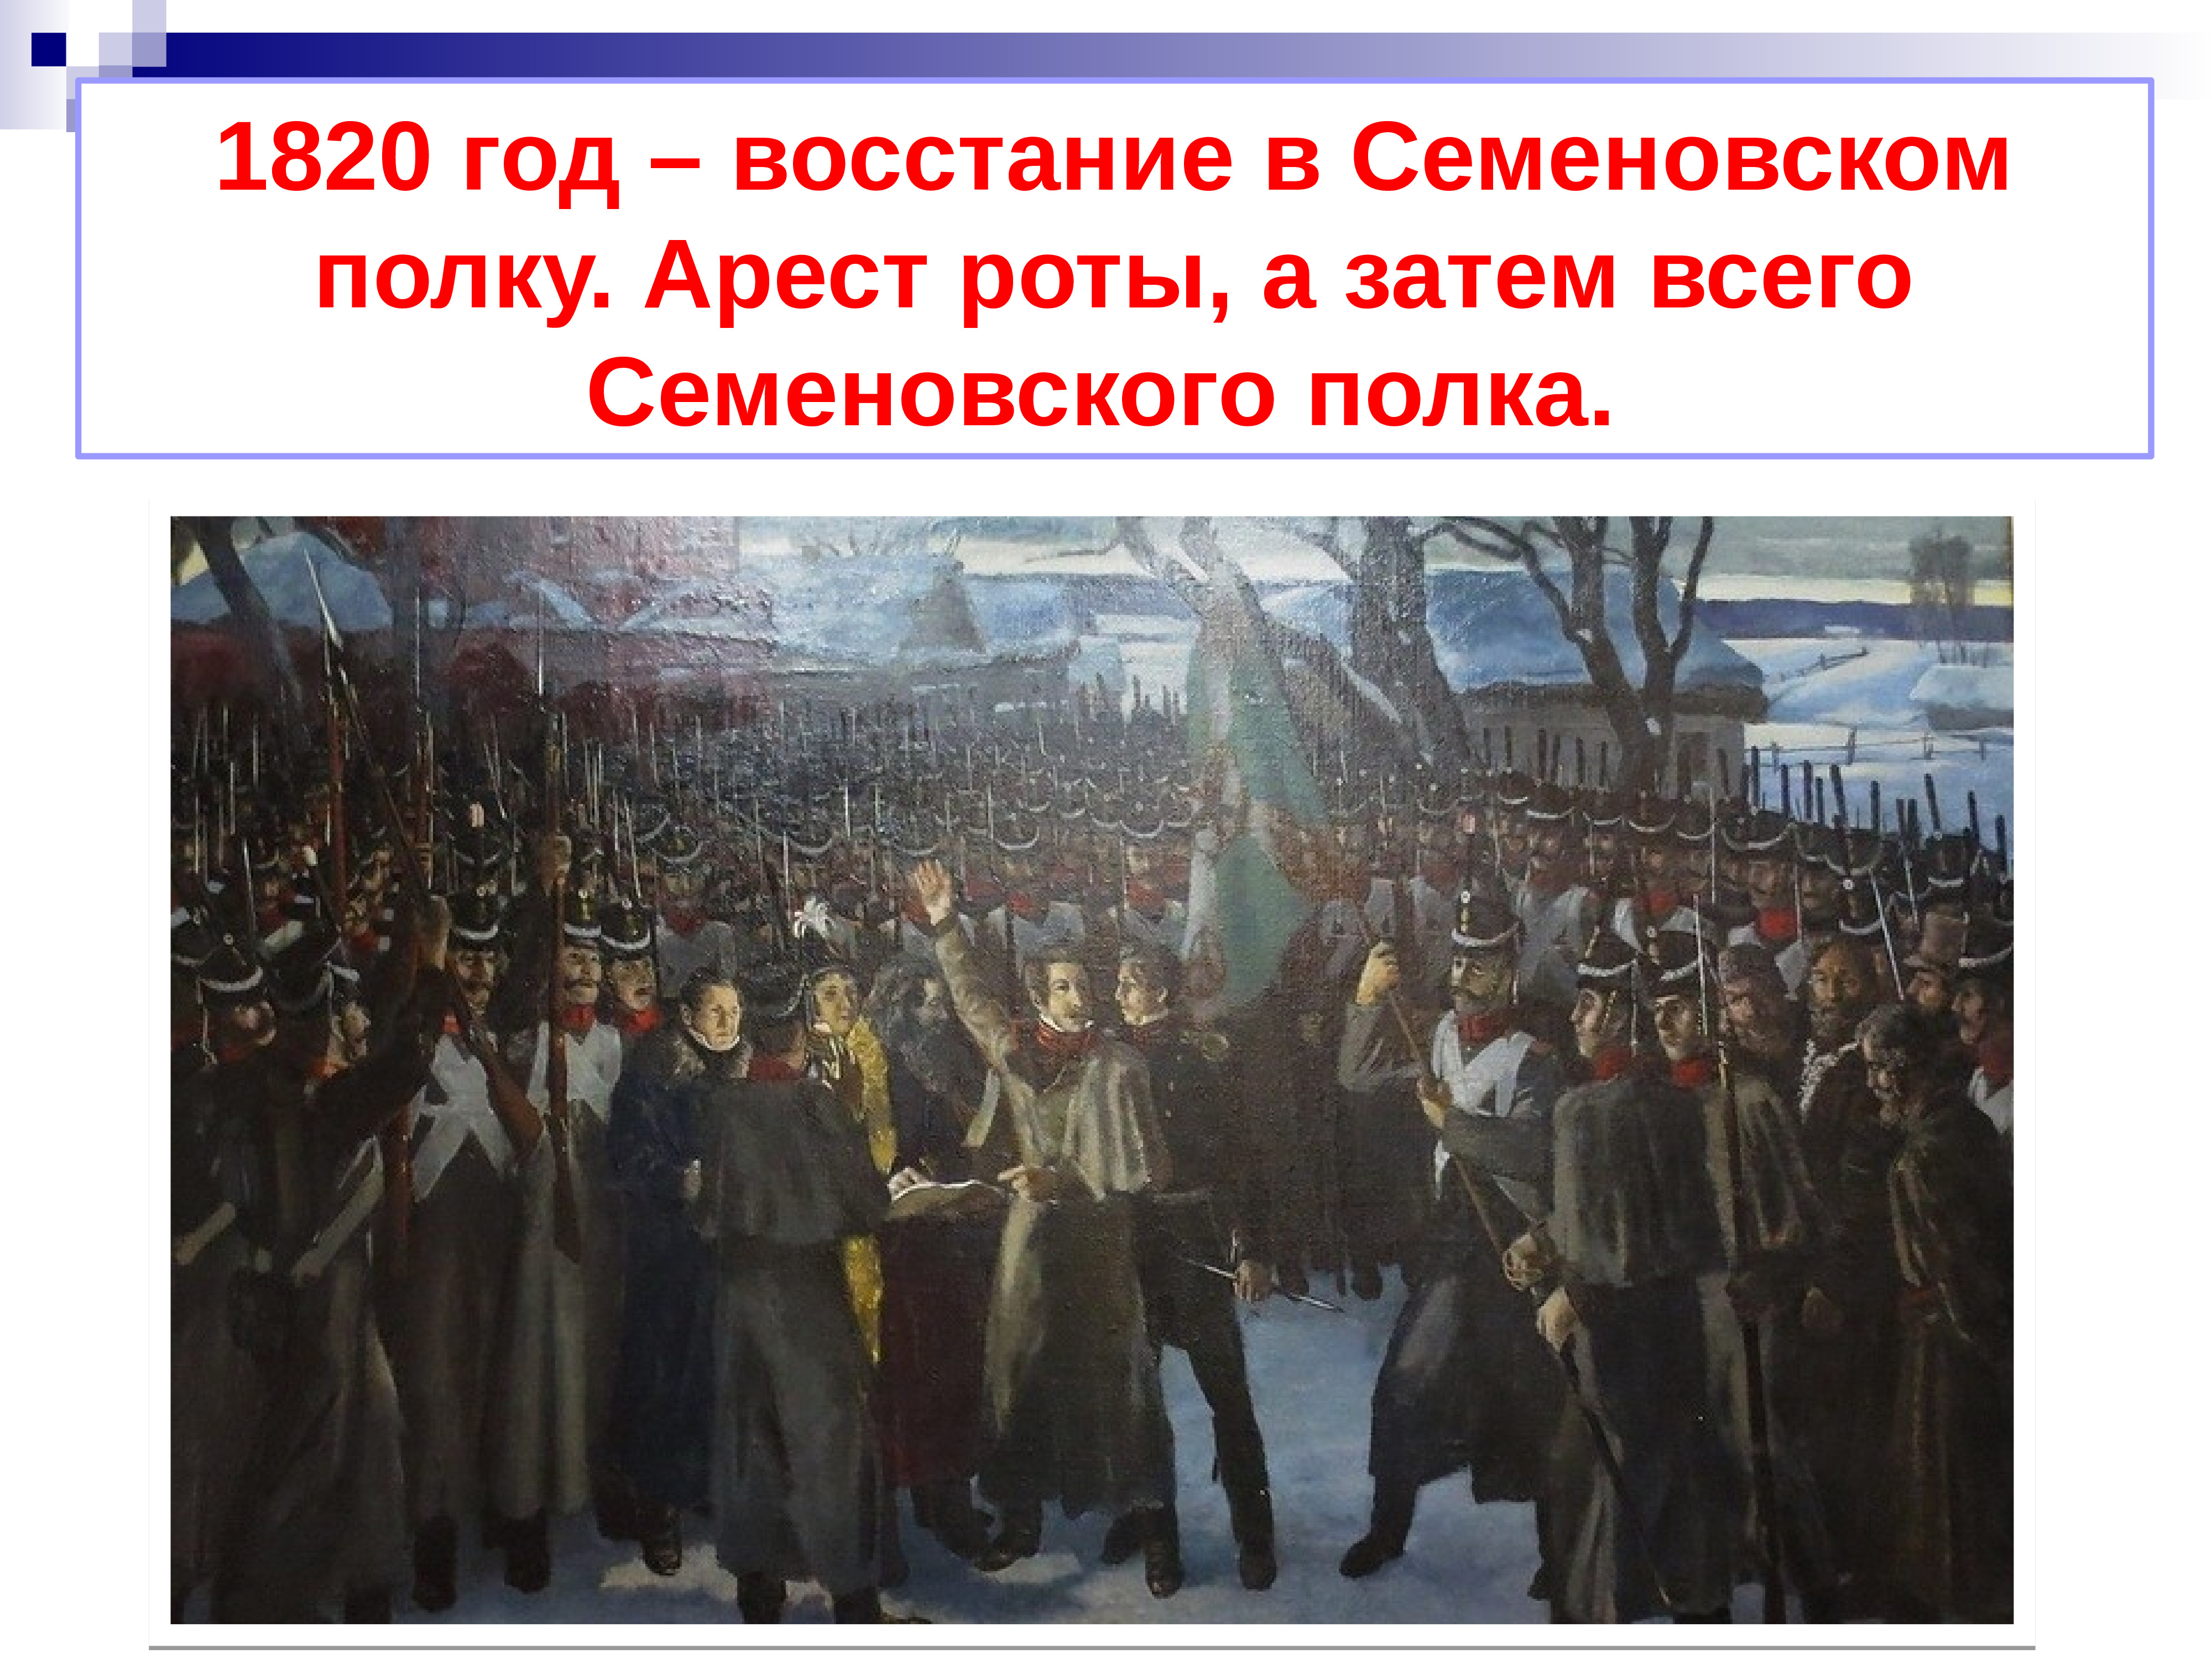 Восстание семёновского полка 1820